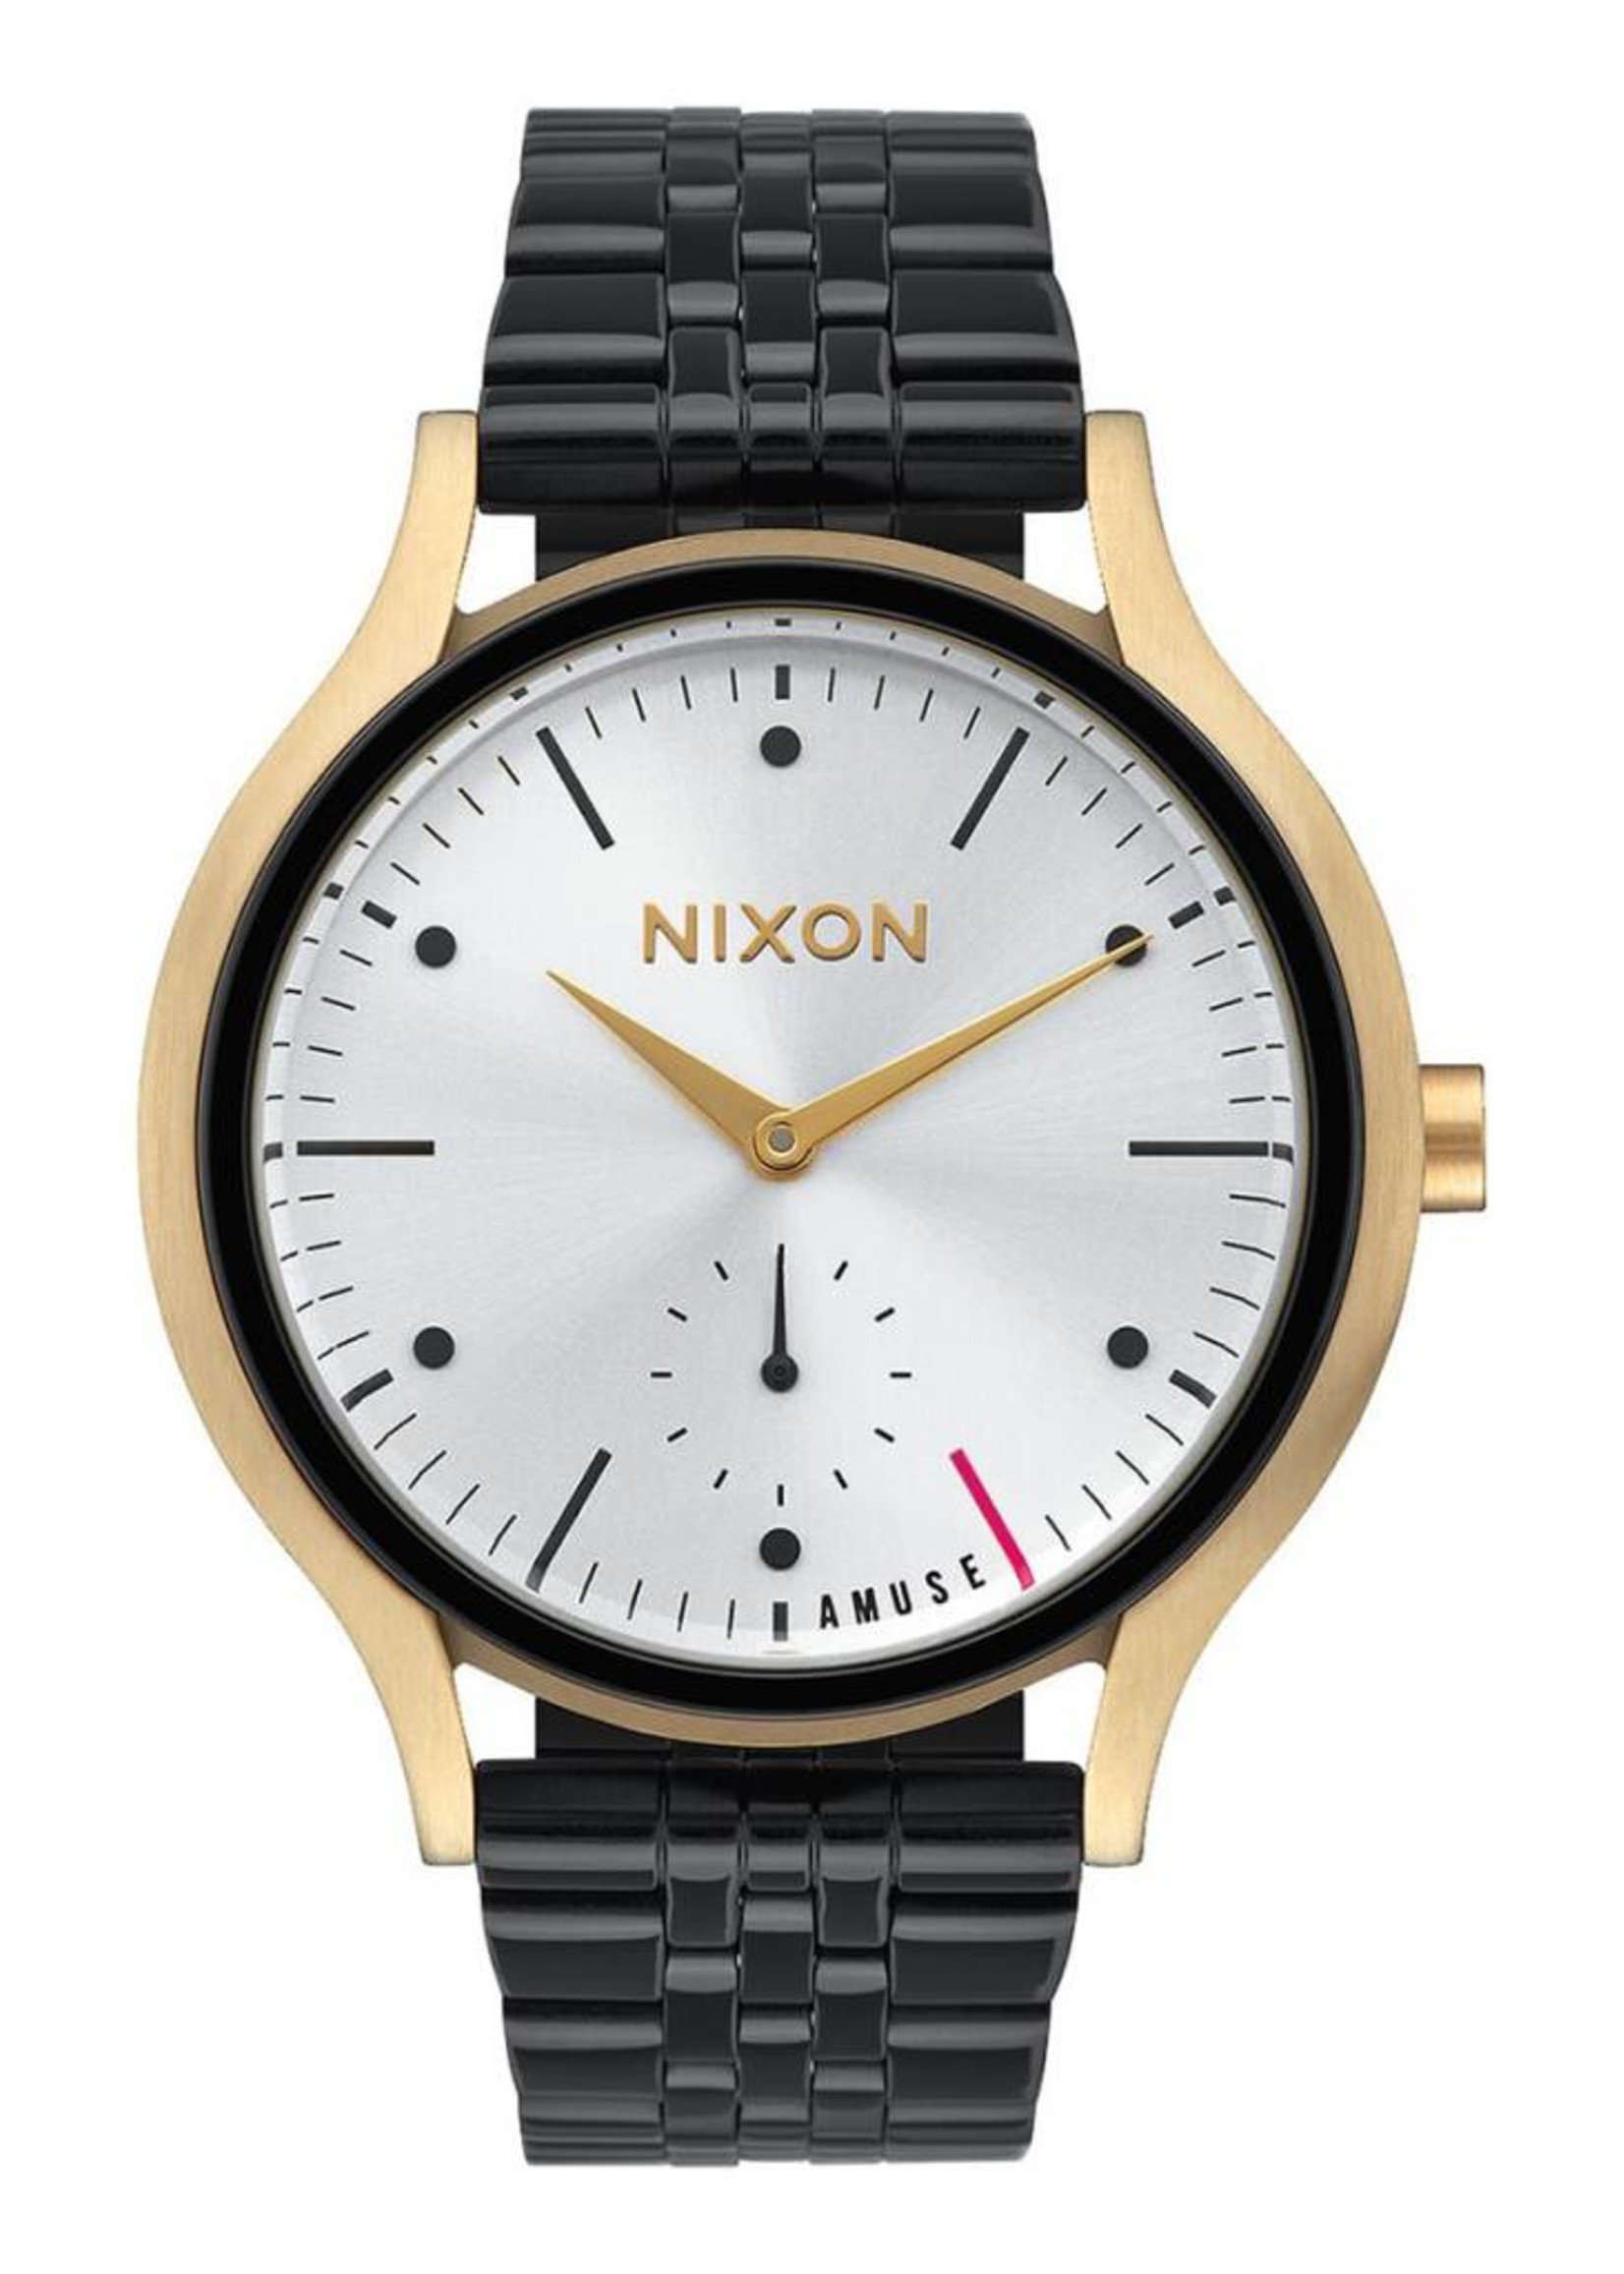 NIXON Watch, Sala style